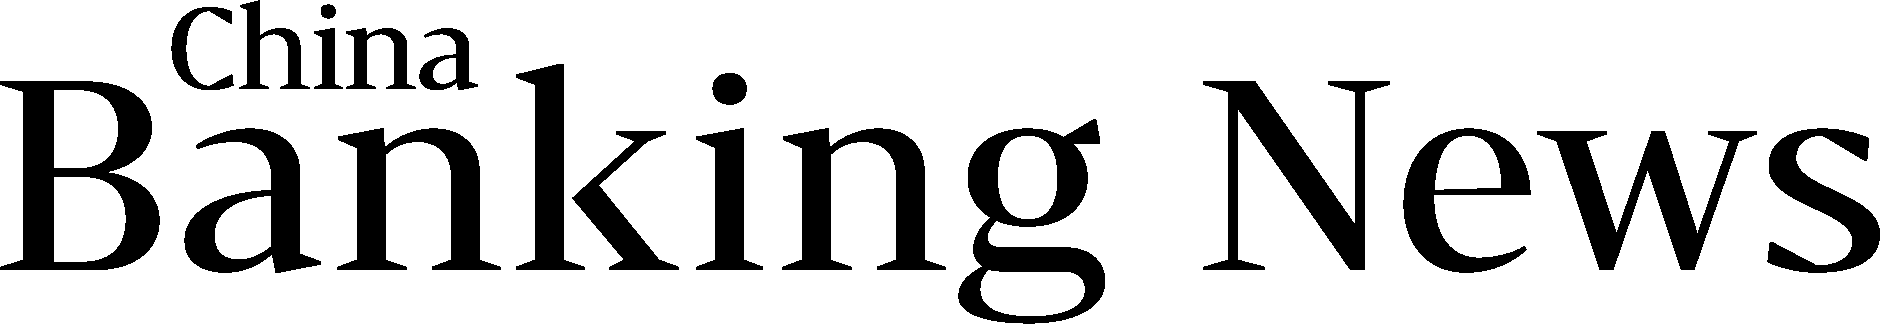 CBN logo 3 black.png